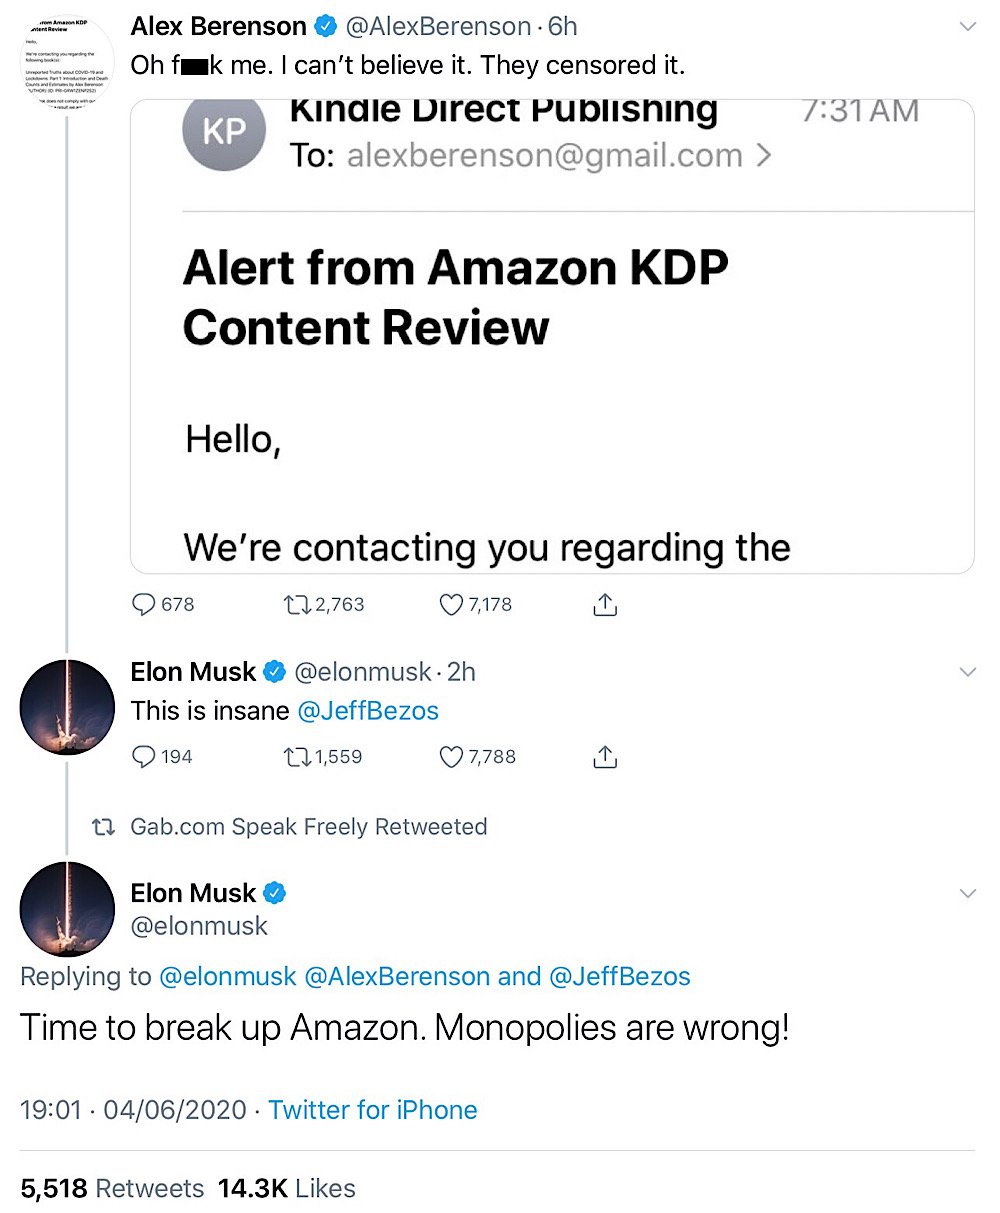 Elon Musk called for the break up of Amazon (Twitter - @elonmusk)